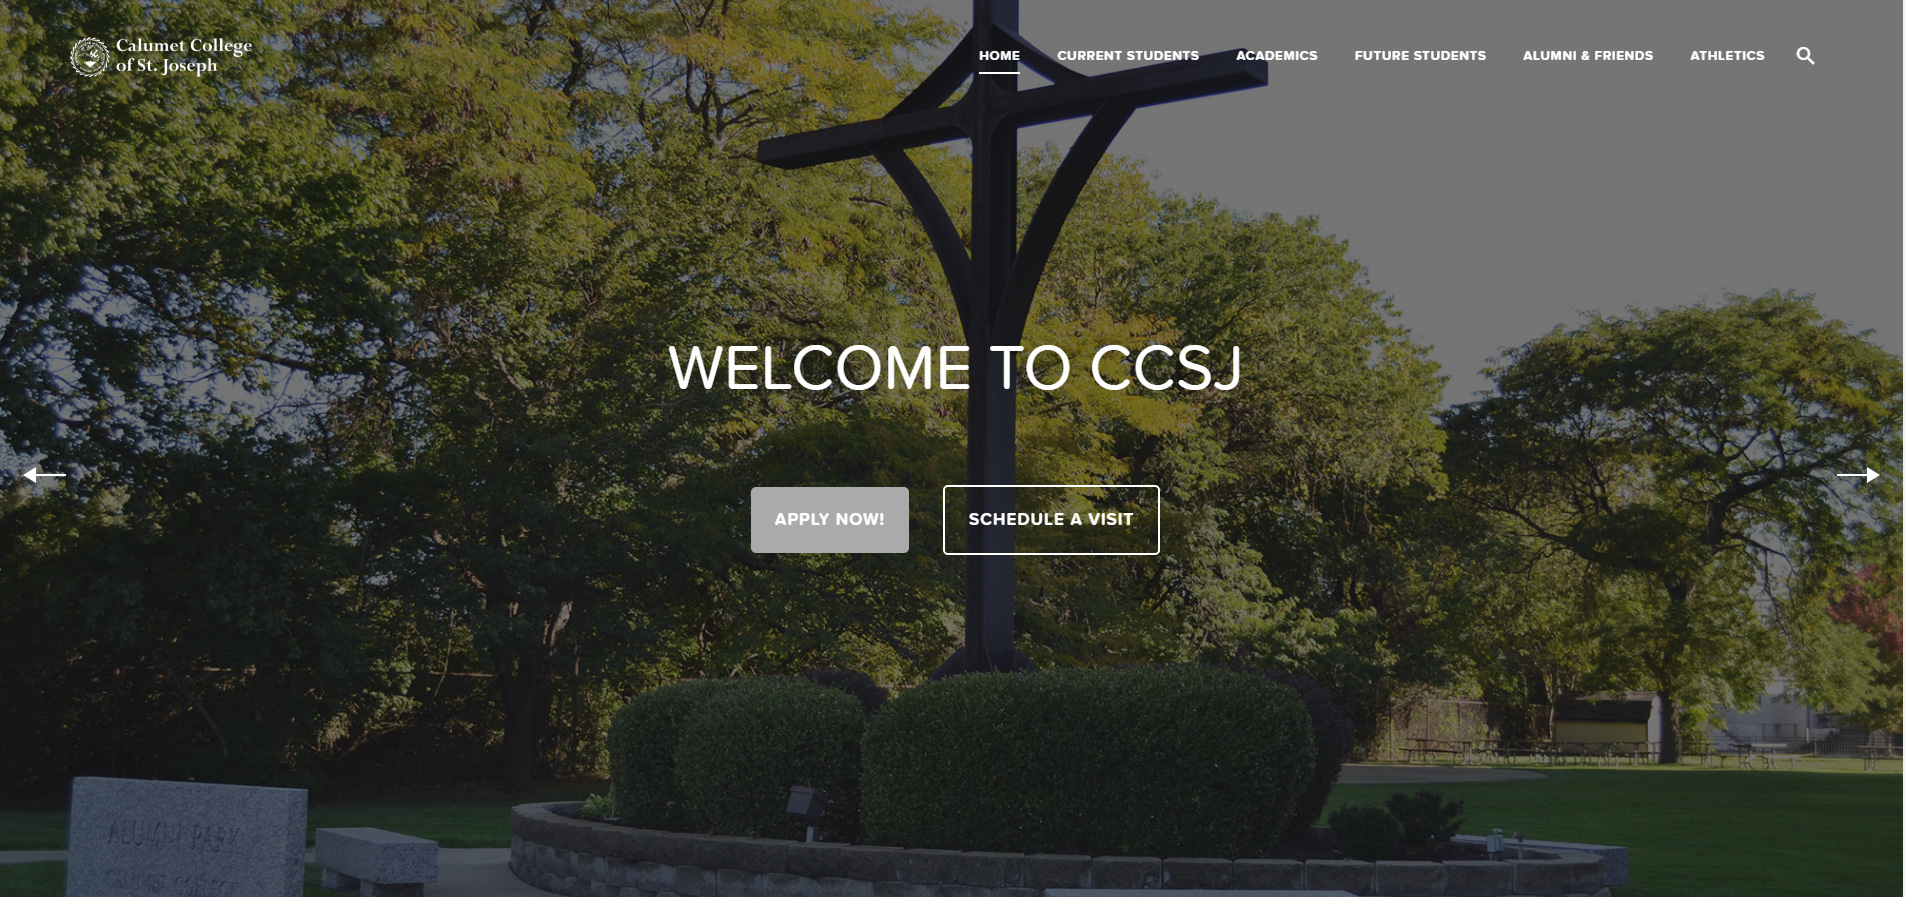 Calumet College of St. Joseph Launches New, Responsive Website